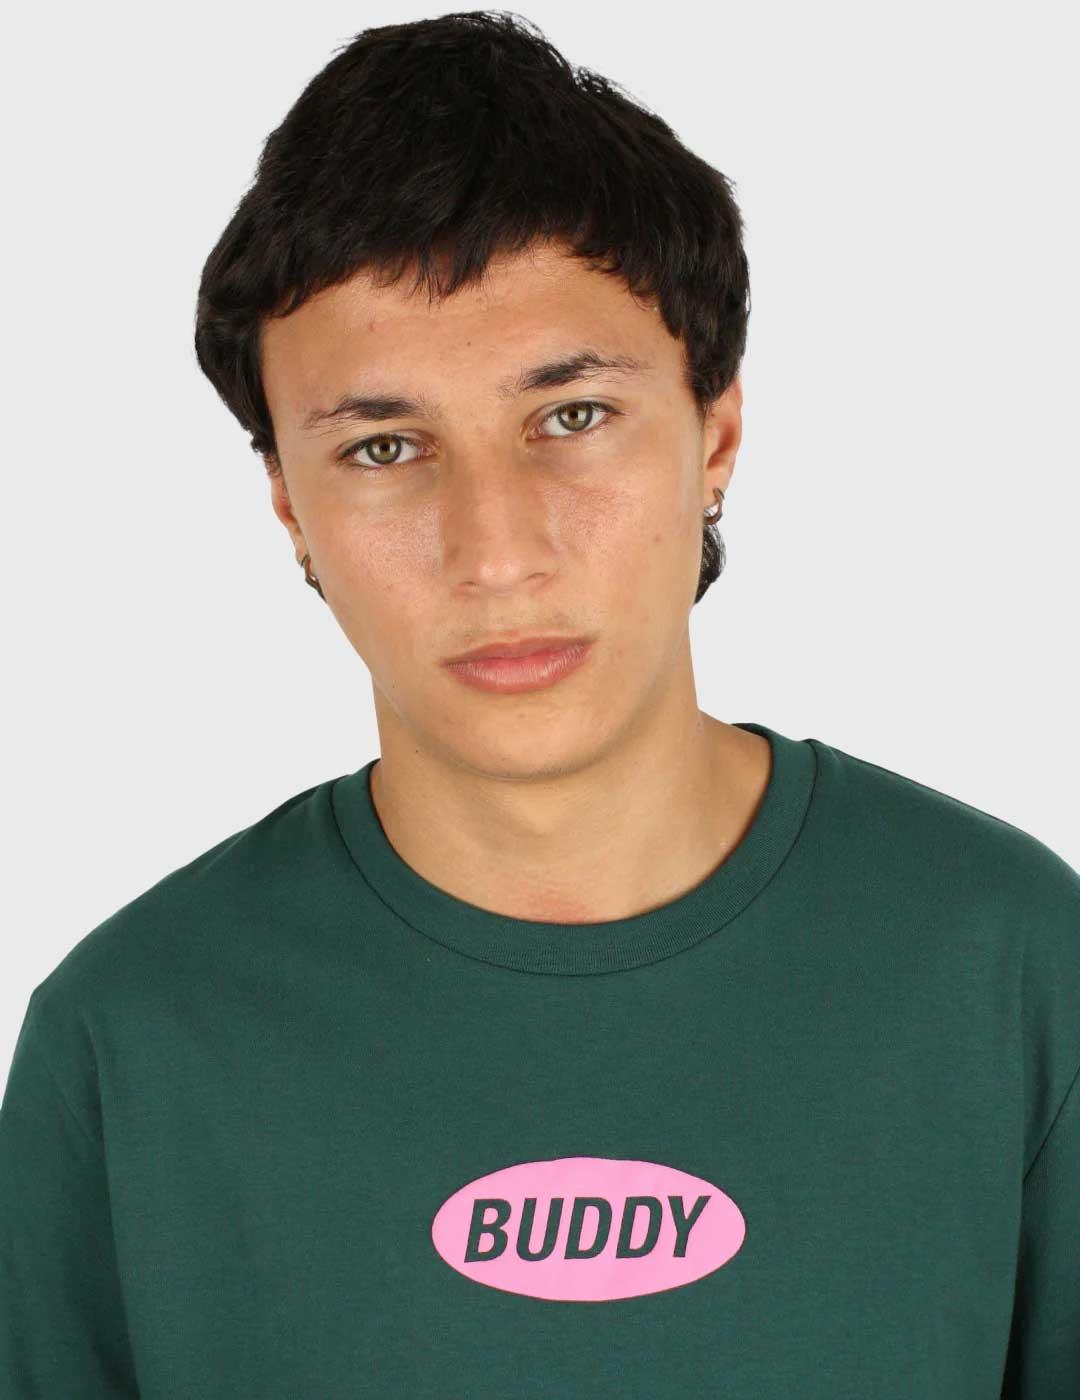 Buddy Safado Camiseta verde botella para hombre